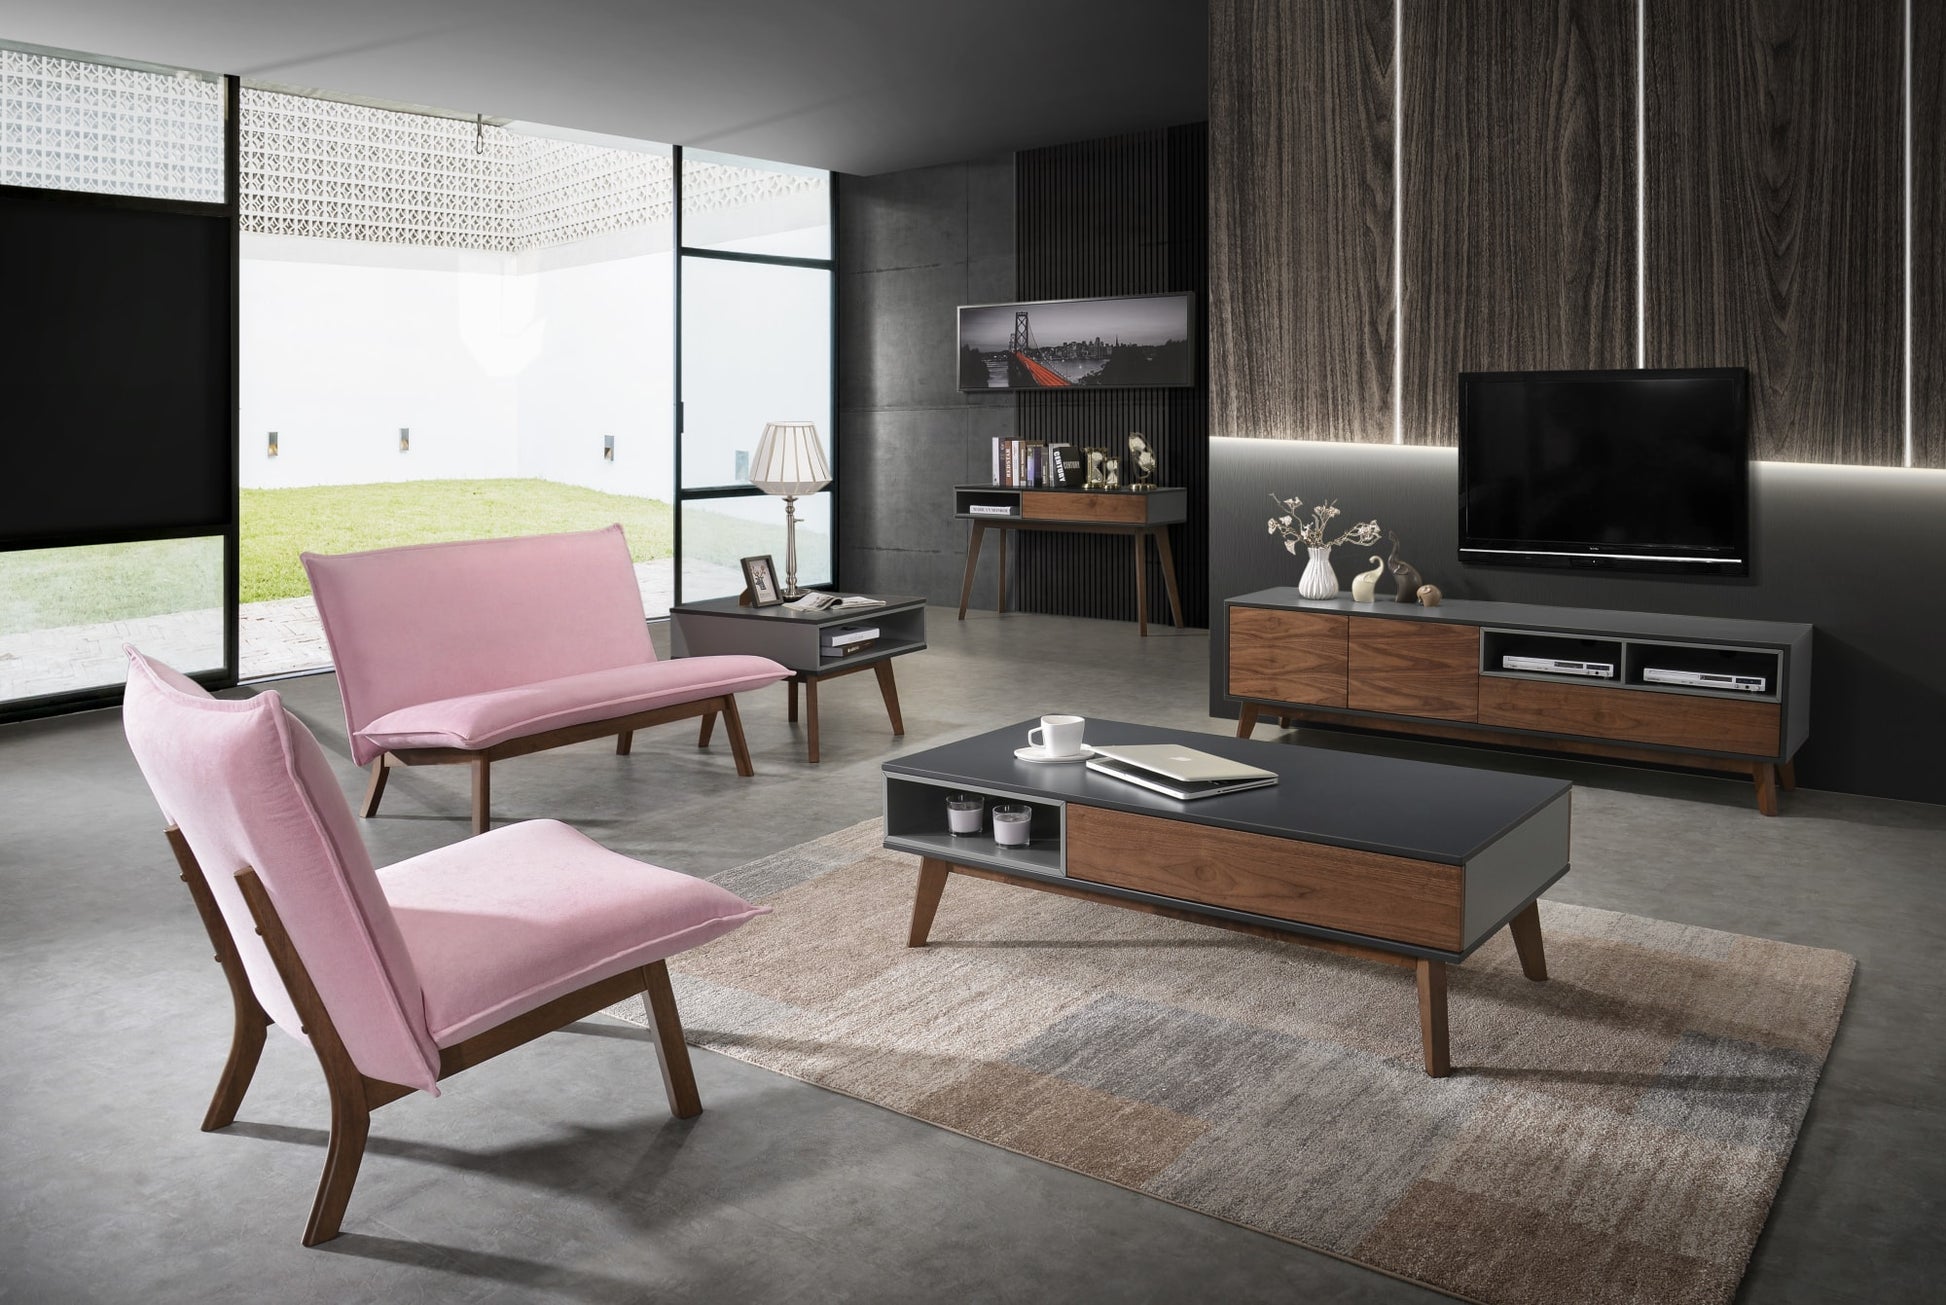 VIG Furniture Modrest Gardner Pink Accent Chair